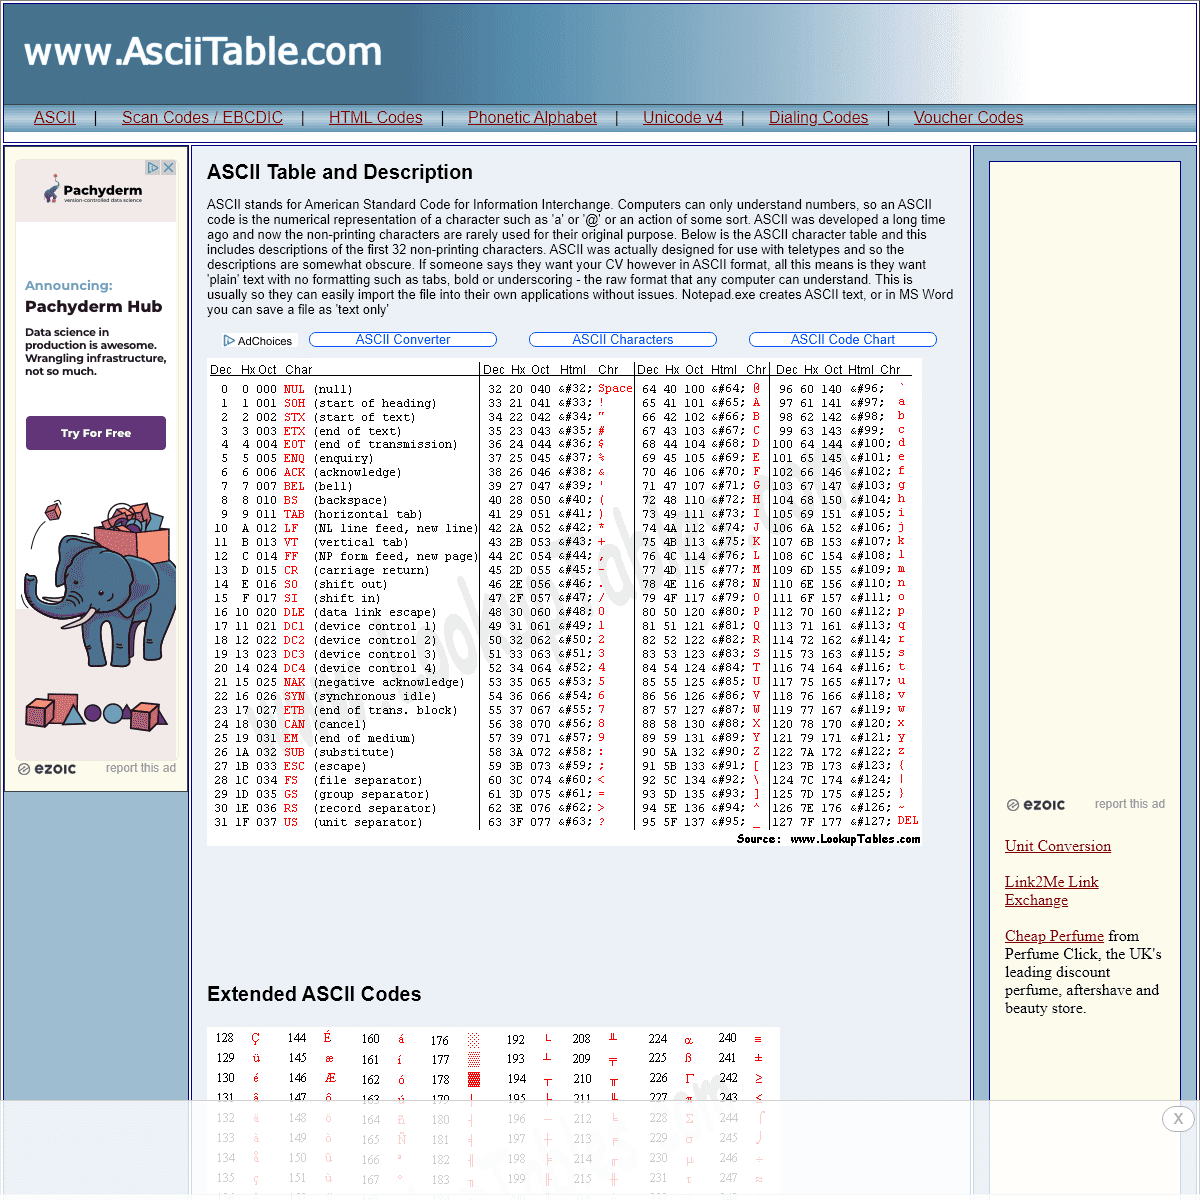 A complete backup of asciitable.com